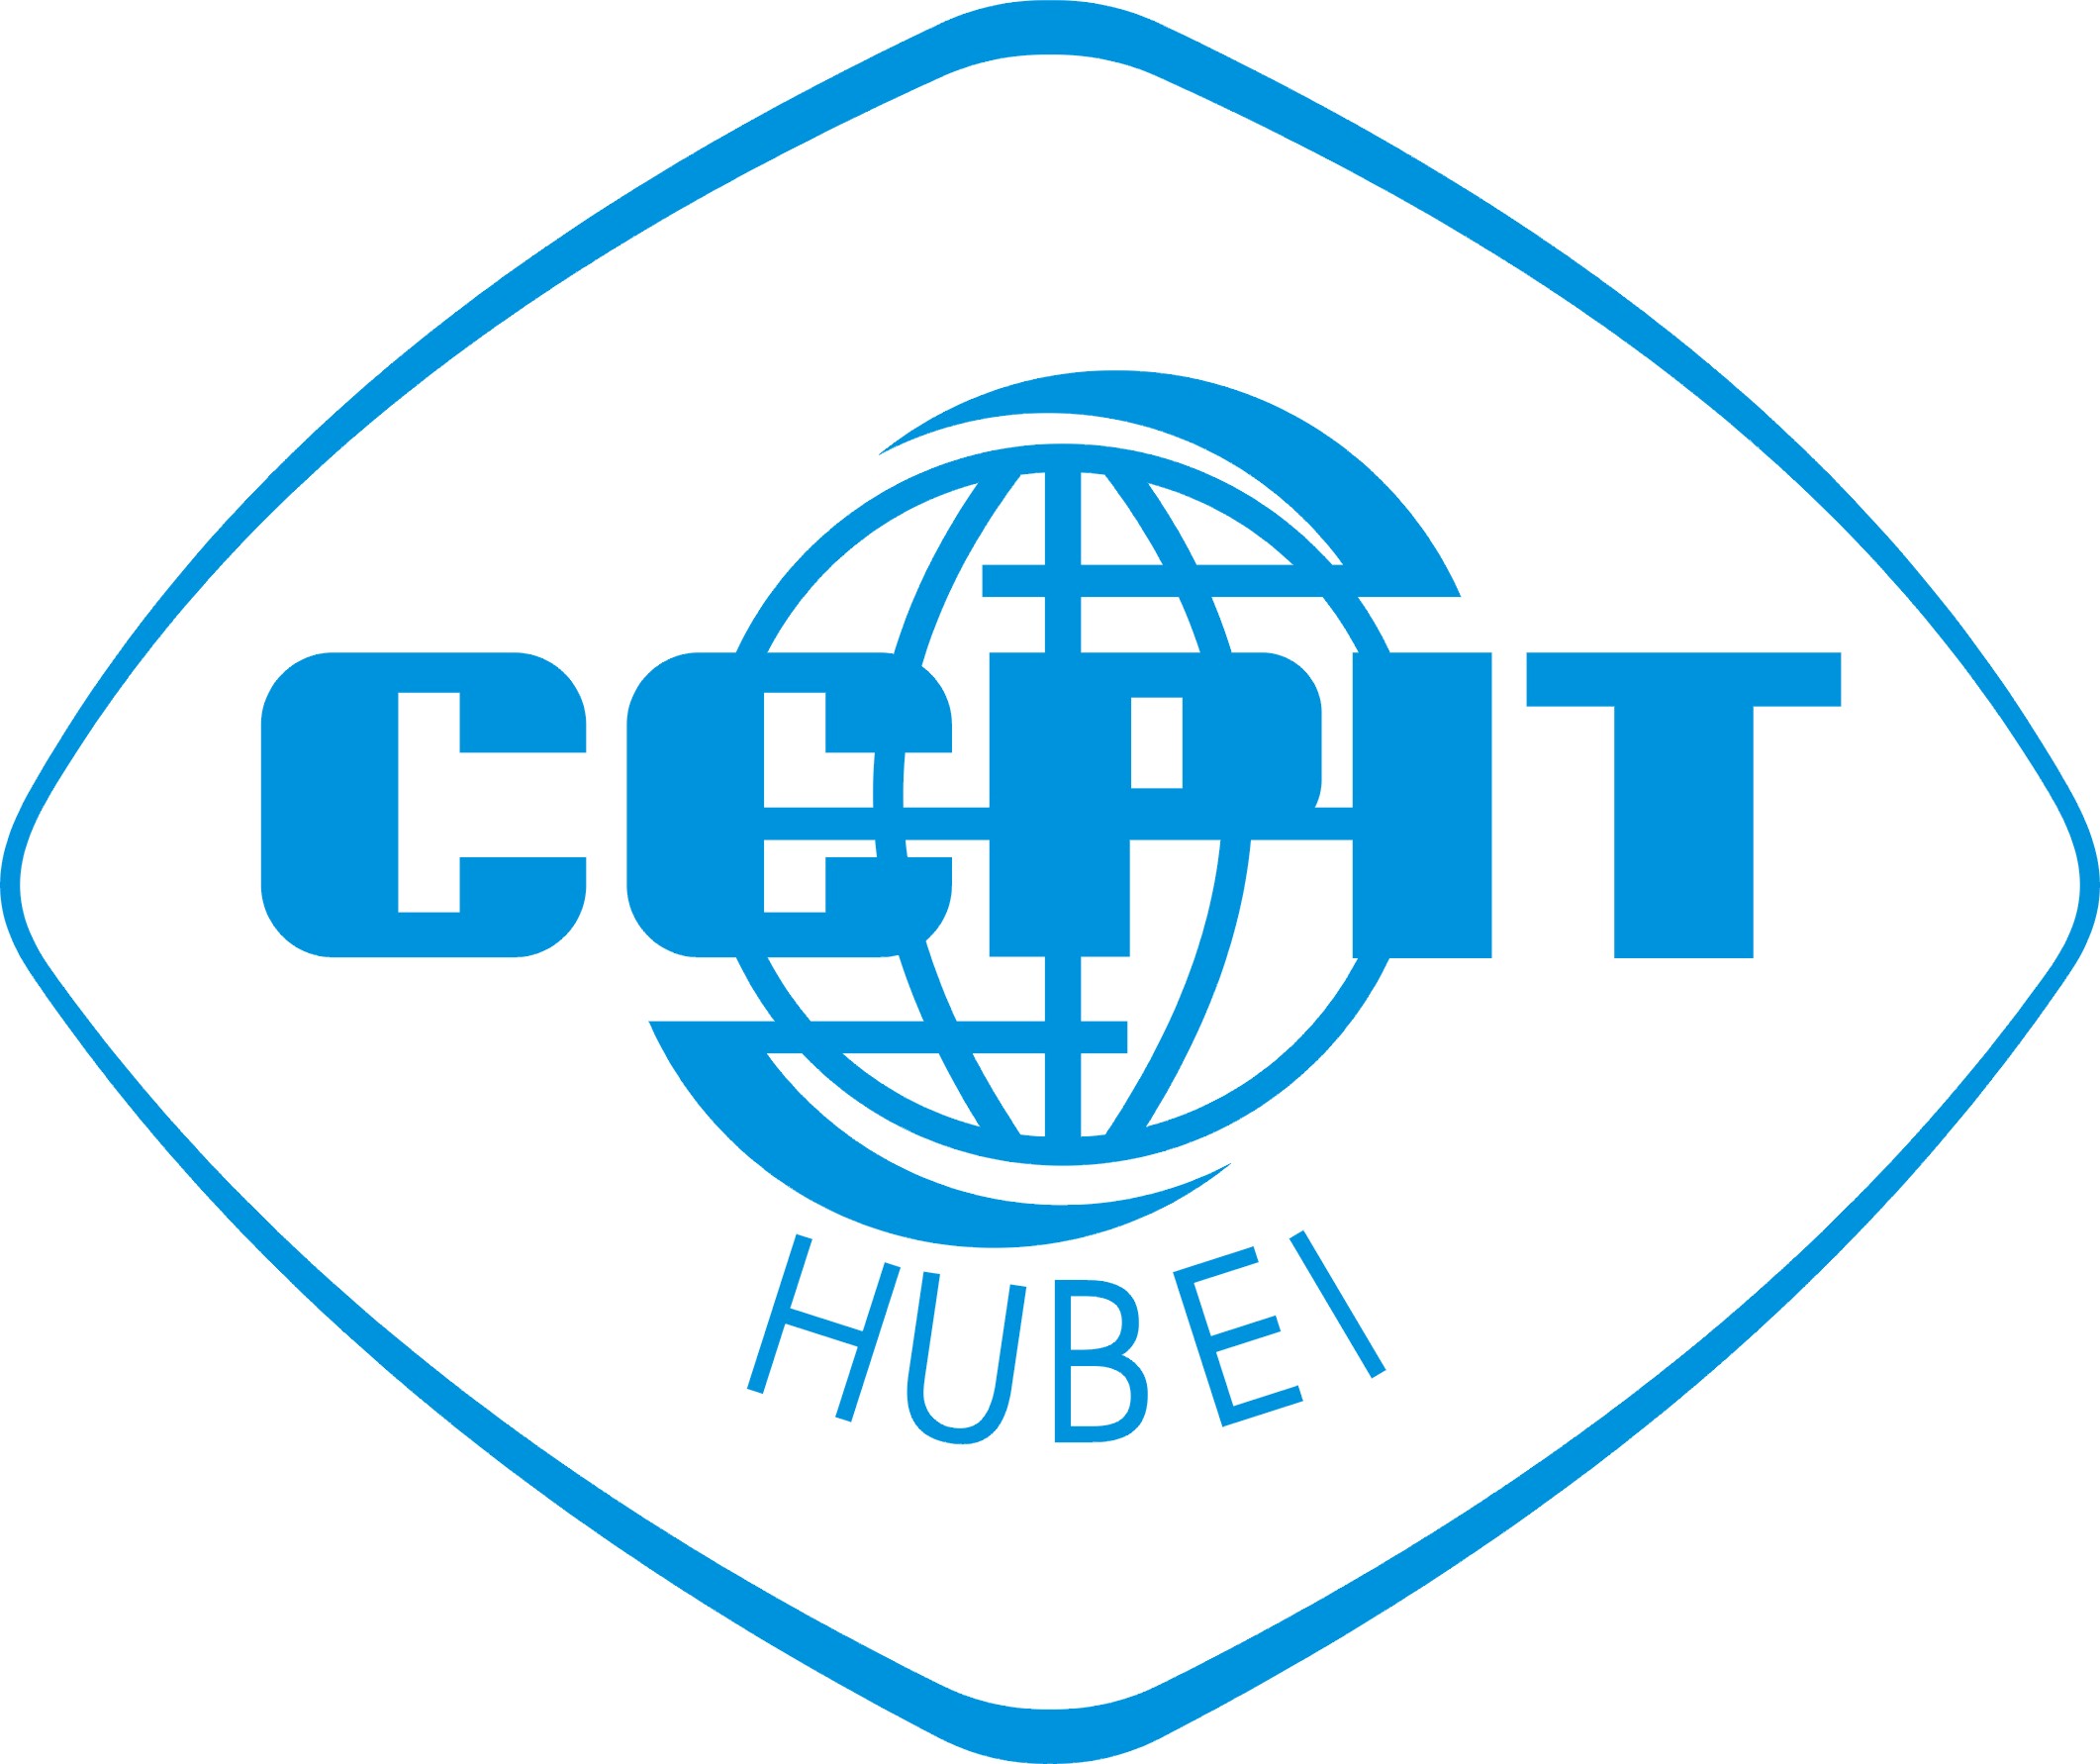 CCPIT Hubei Chin a logo